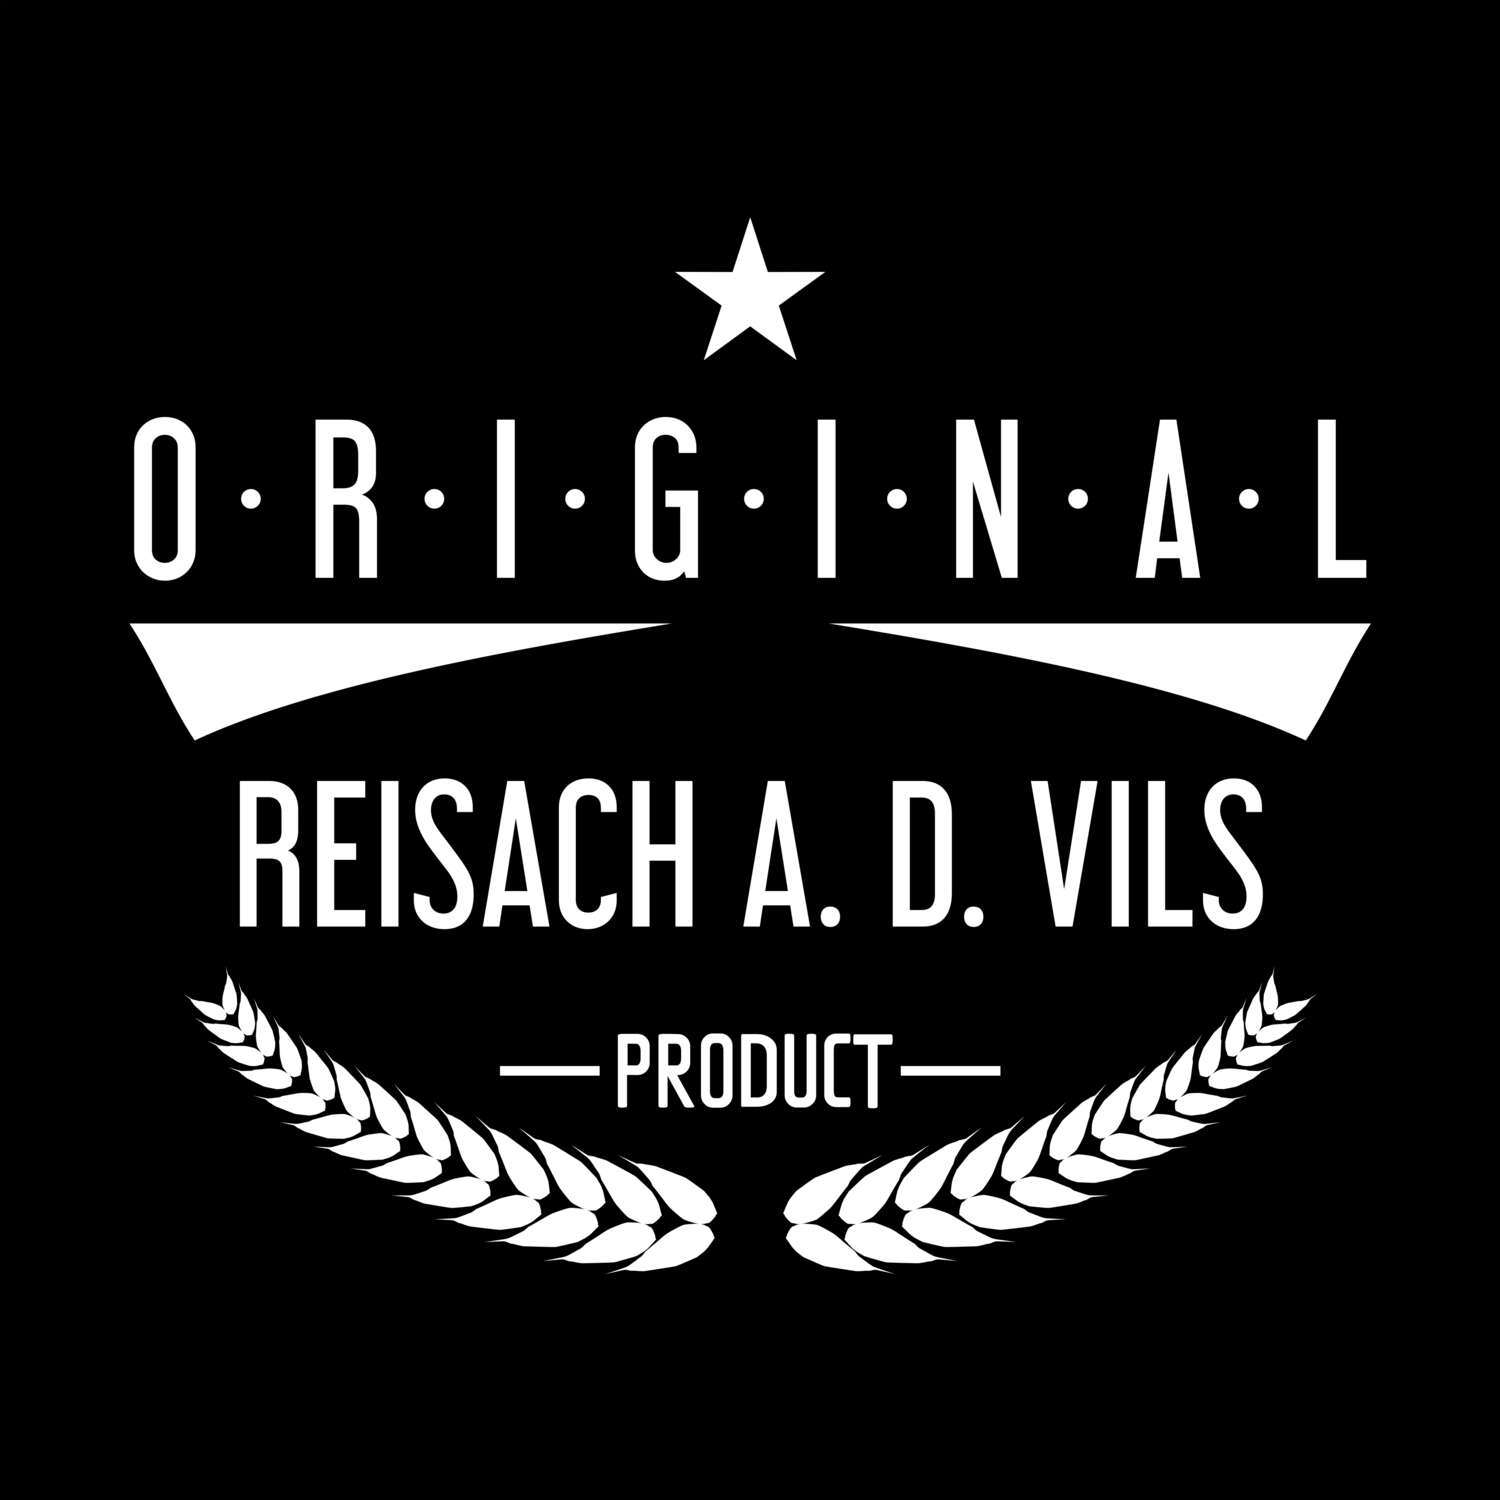 Reisach a. d. Vils T-Shirt »Original Product«